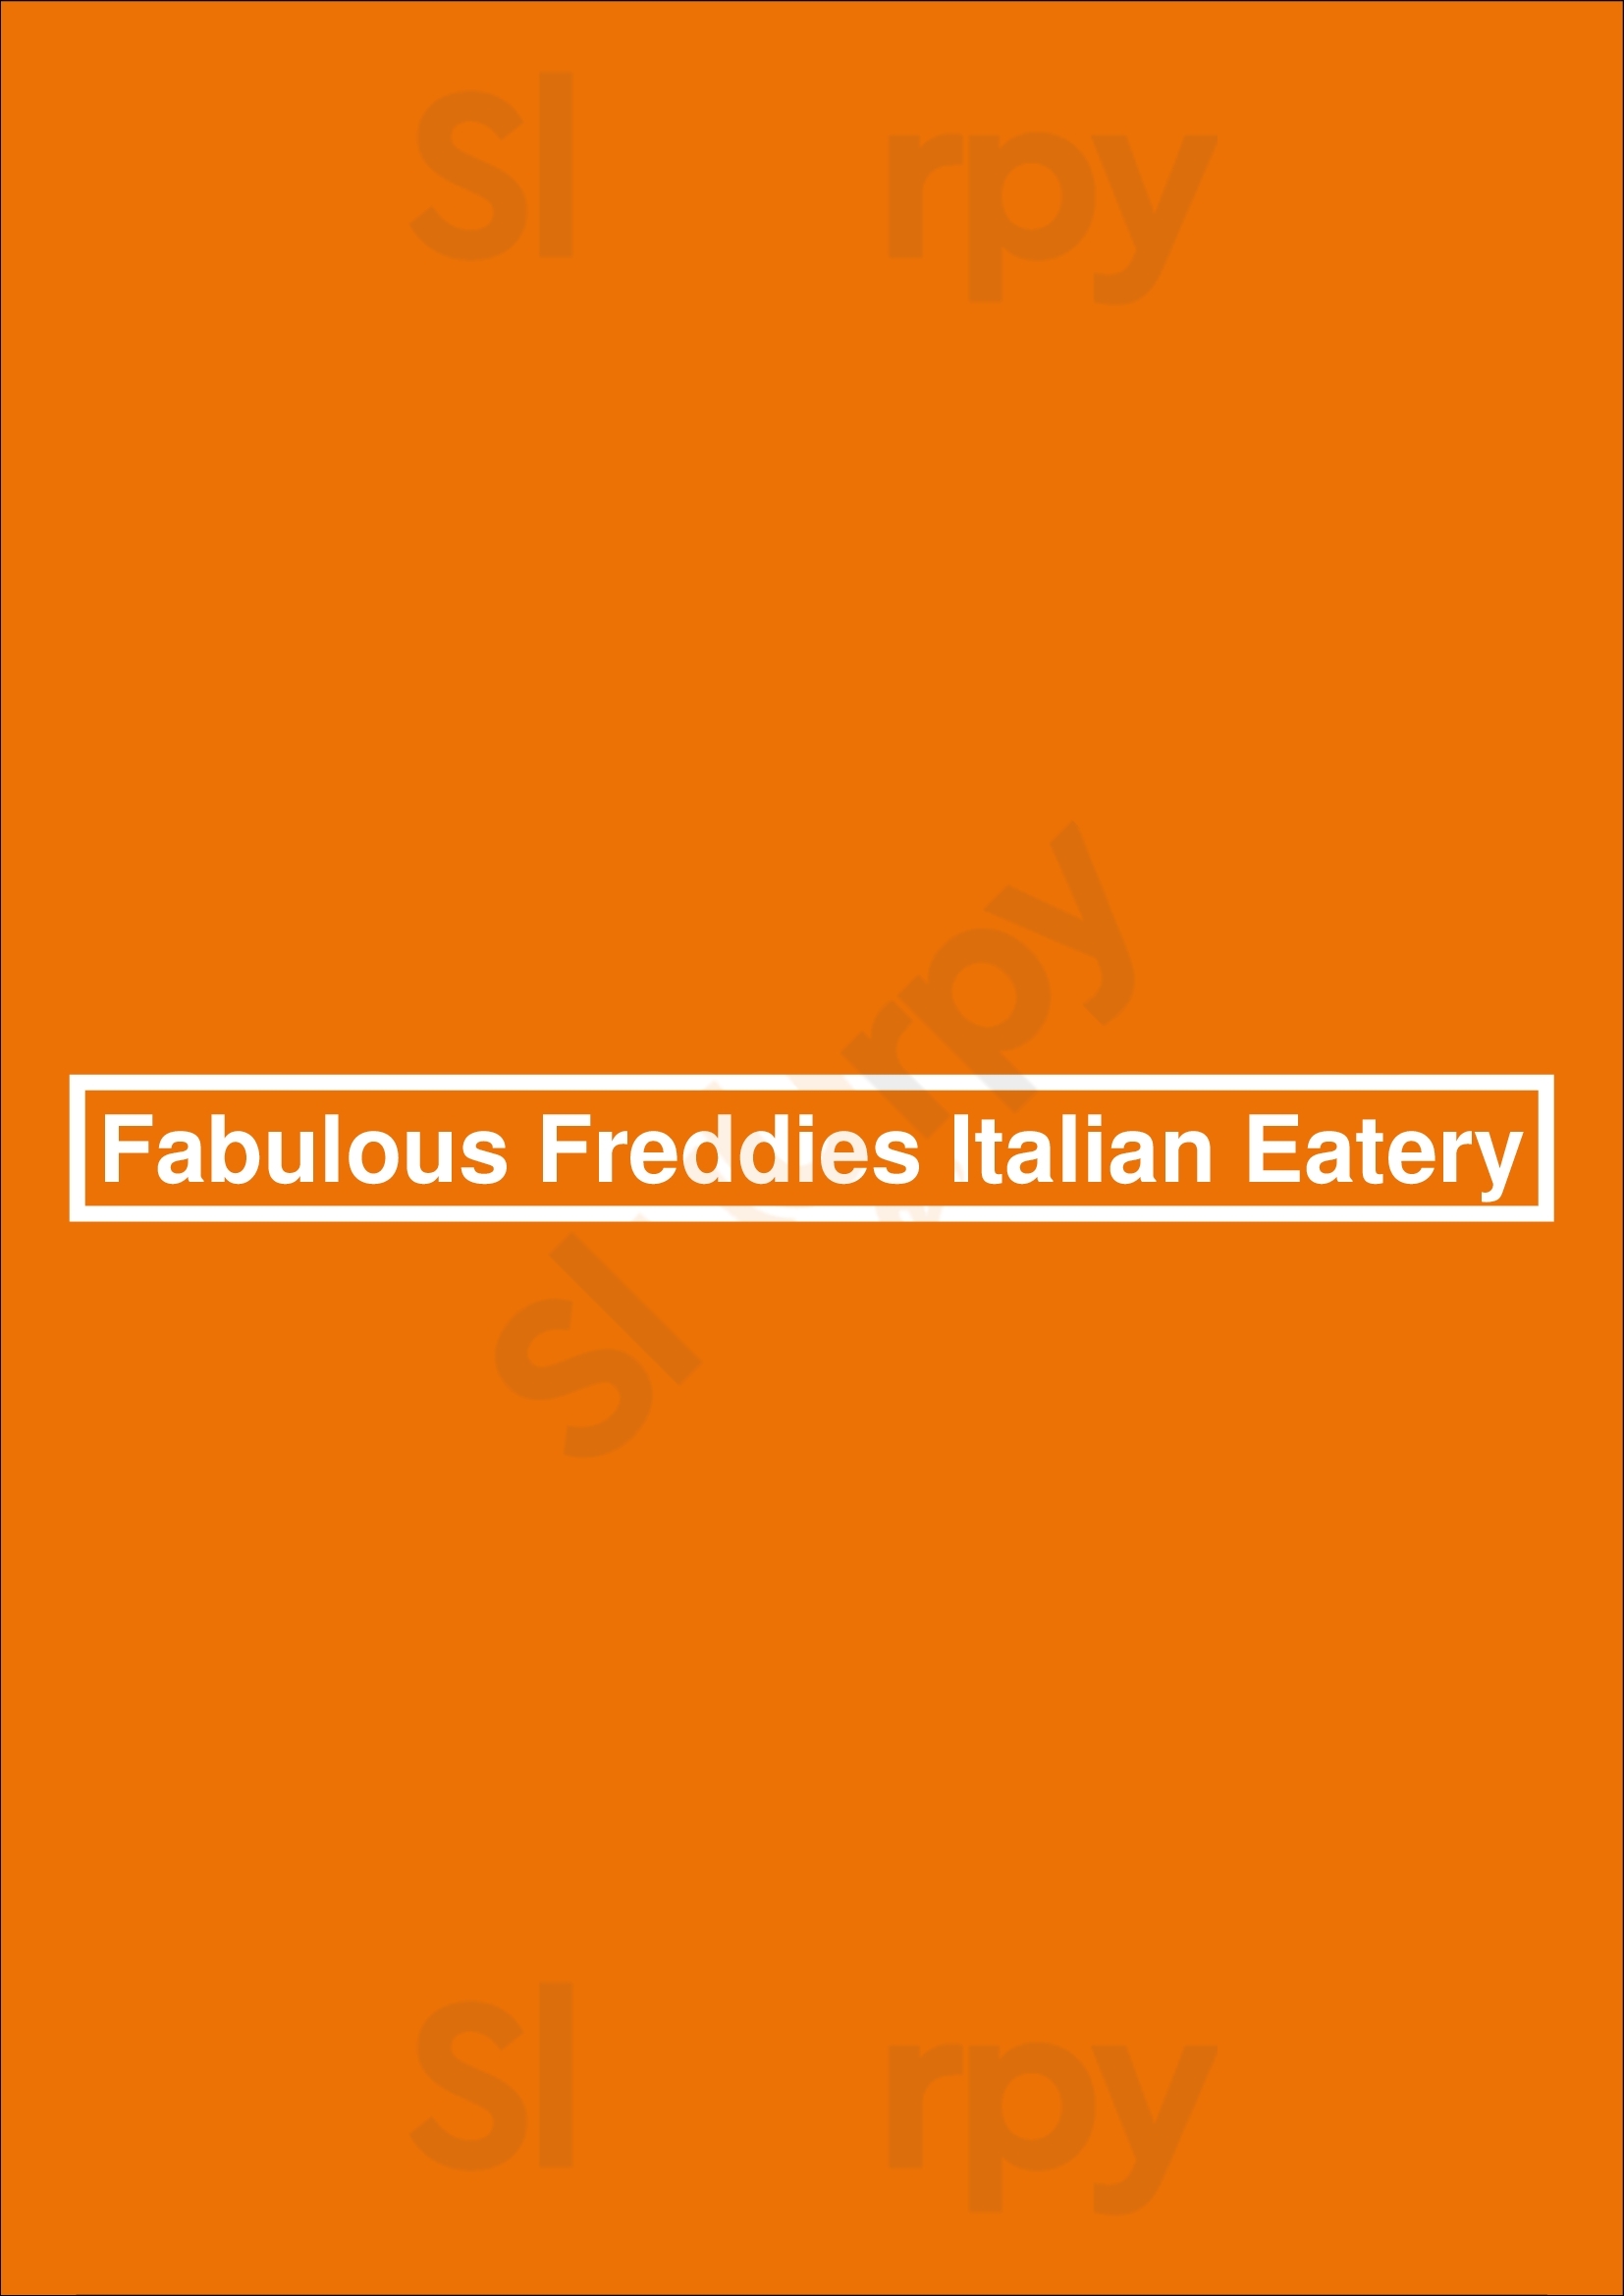 Fabulous Freddies Italian Eatery Chicago Menu - 1